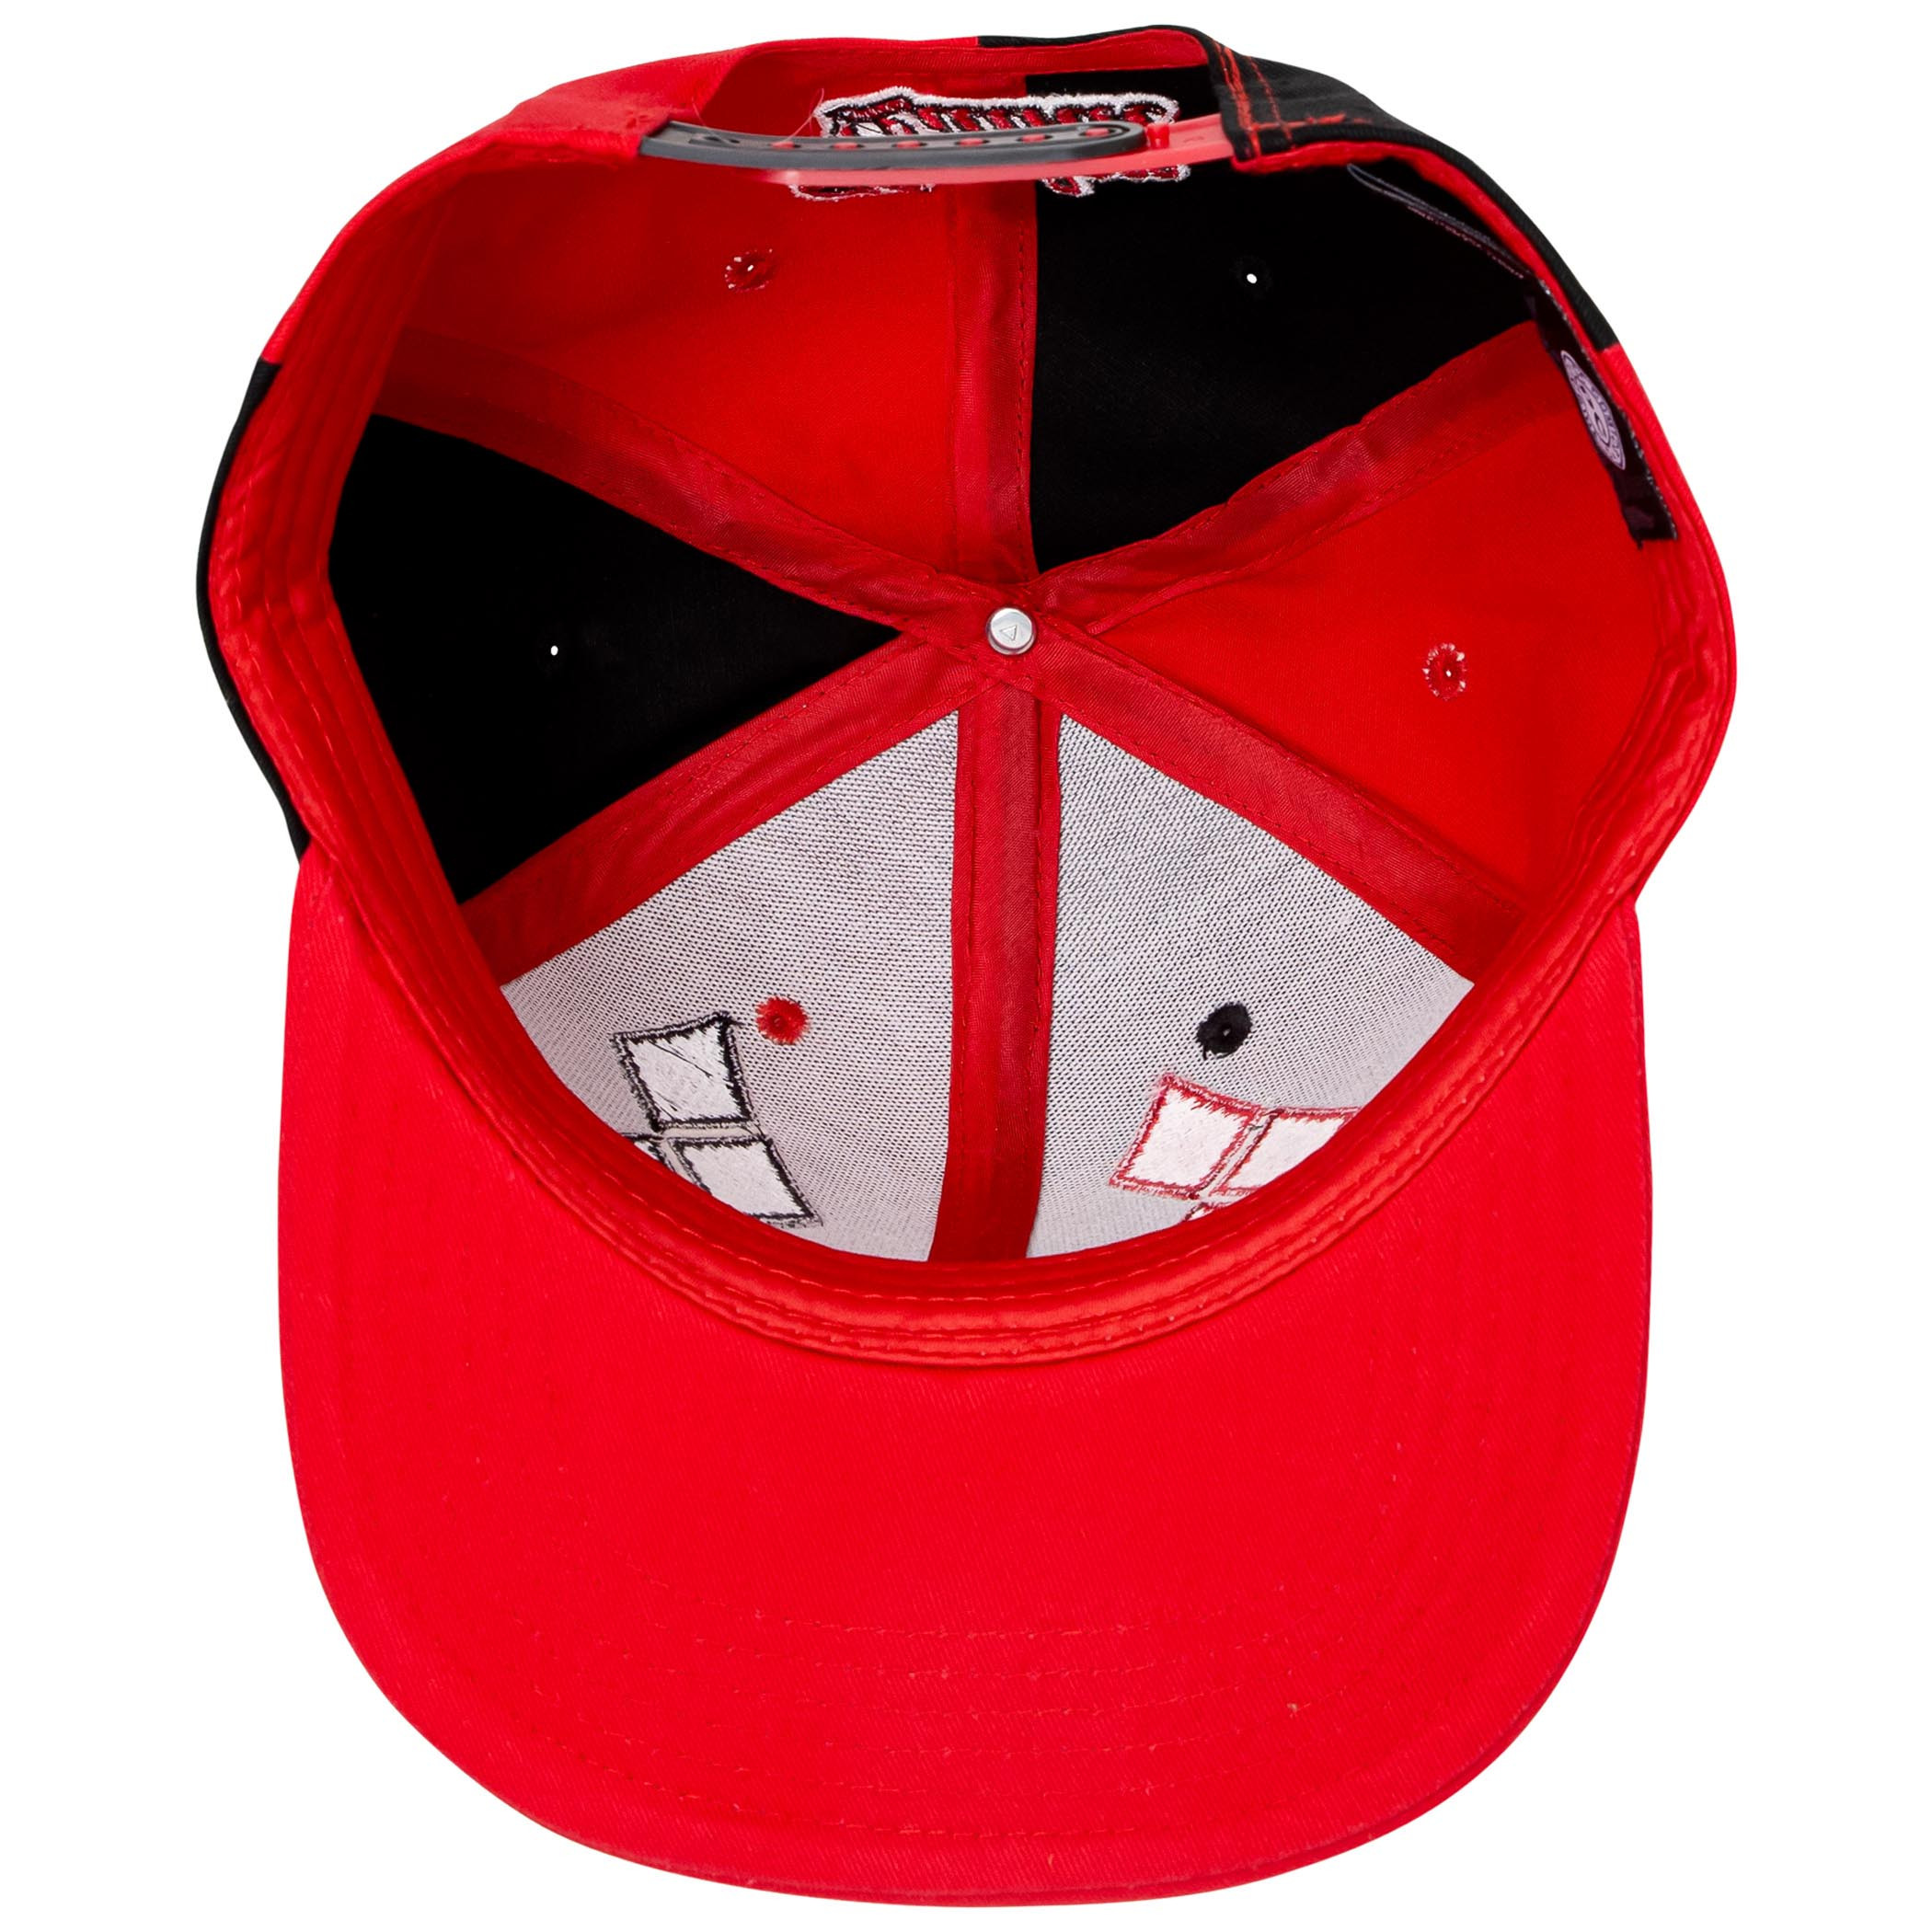 Harley Quinn Diamonds Symbol Adjustable Snapback Hat